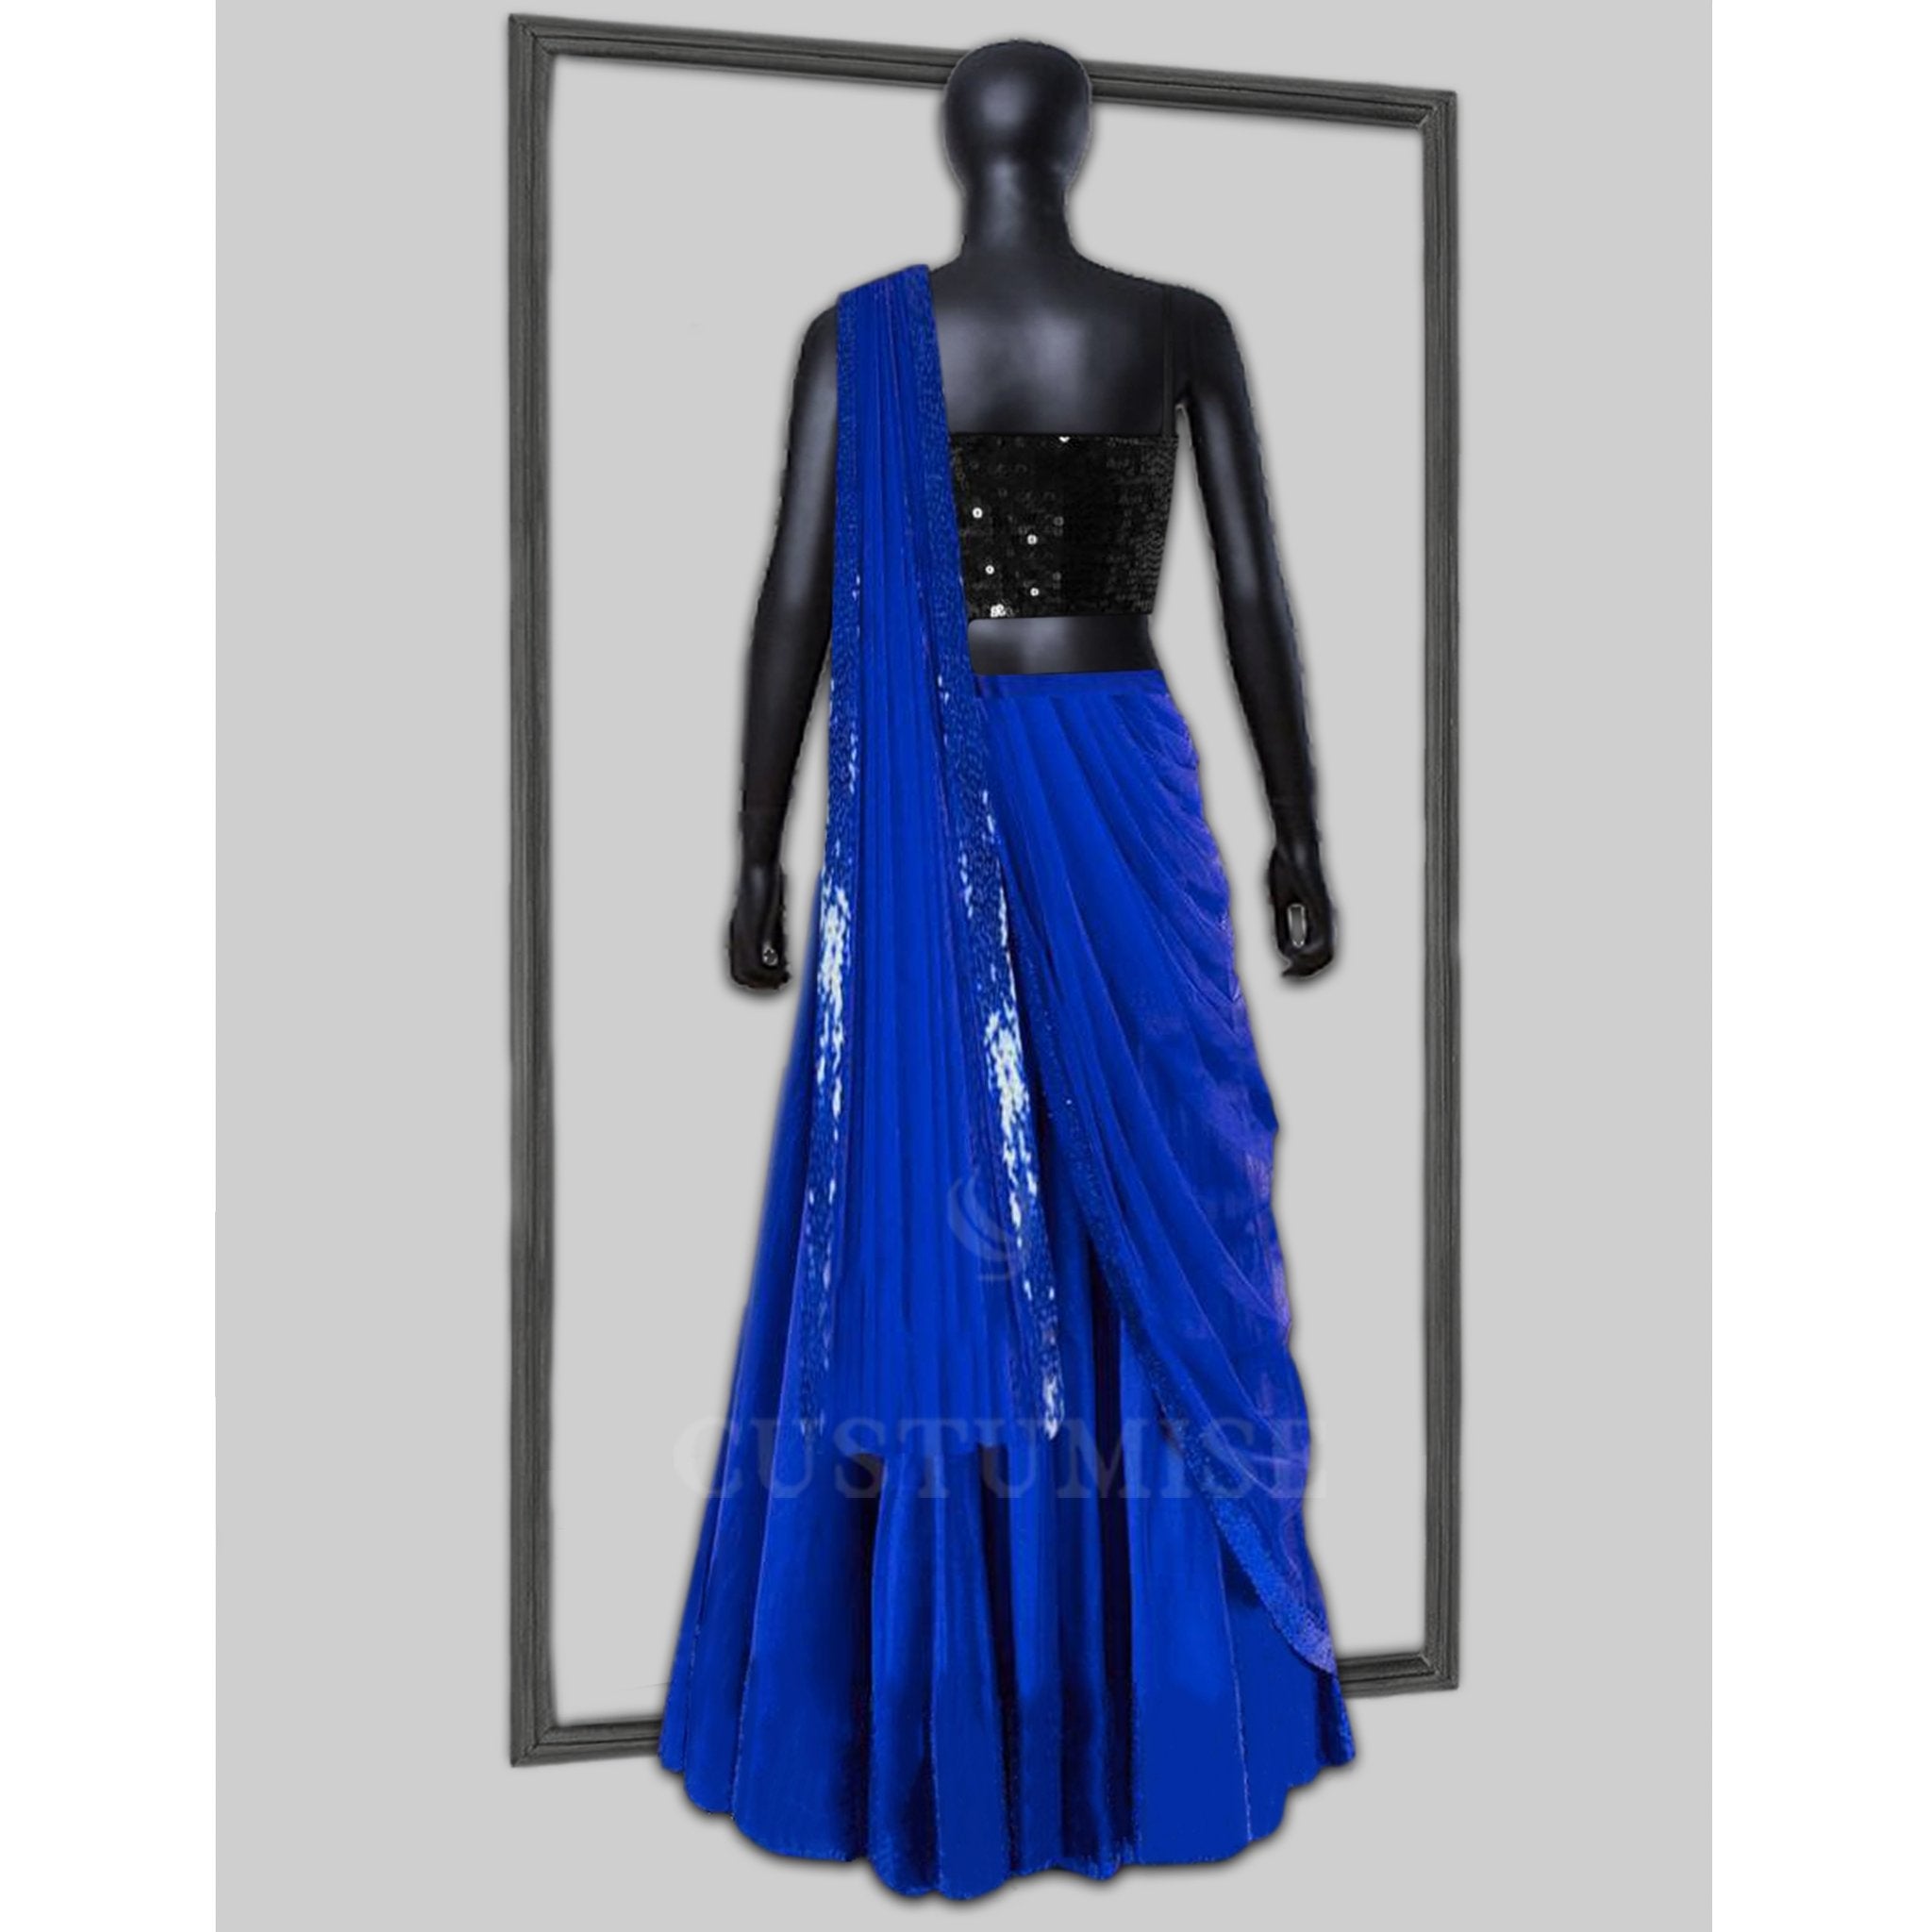 Royal Elegance: Blue Draped Saree with Black Sequin Blouse - Indian Designer Bridal Wedding Outfit